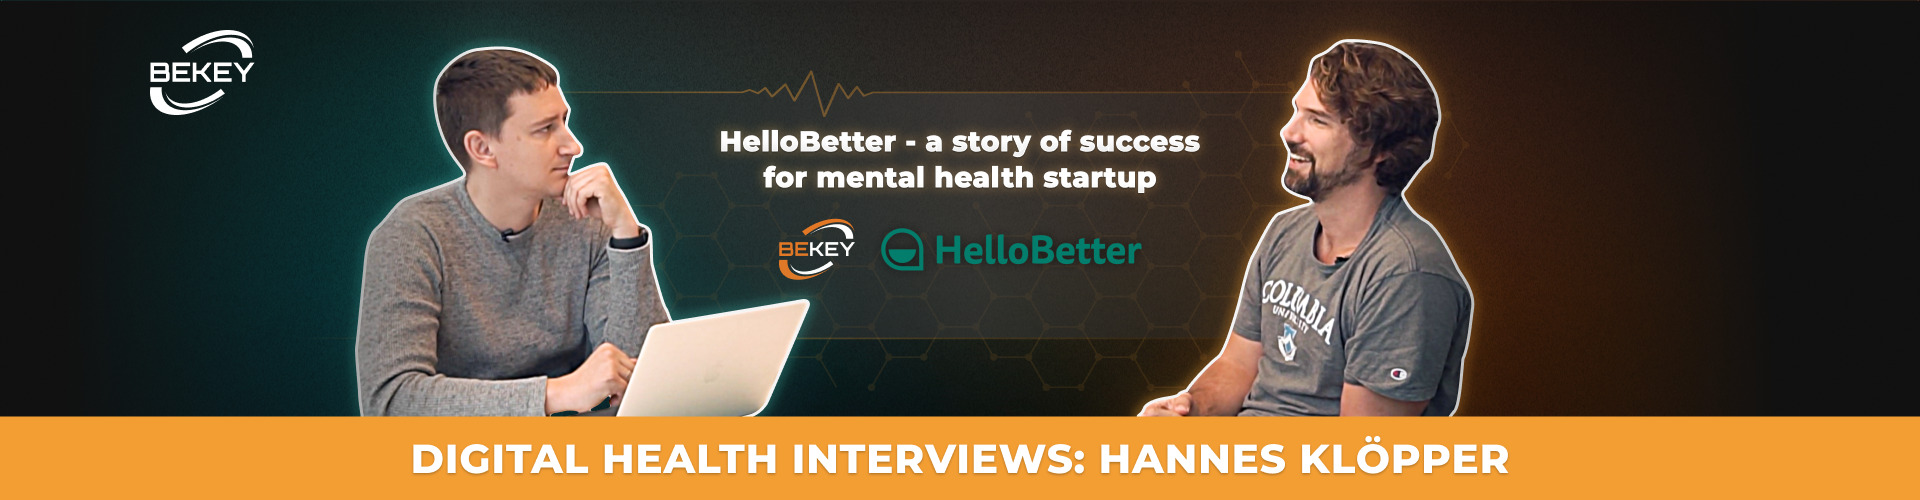 HelloBetter — a Story of Success for Mental Health Startup. Digital Health Interviews: Hannes Klöpper - image